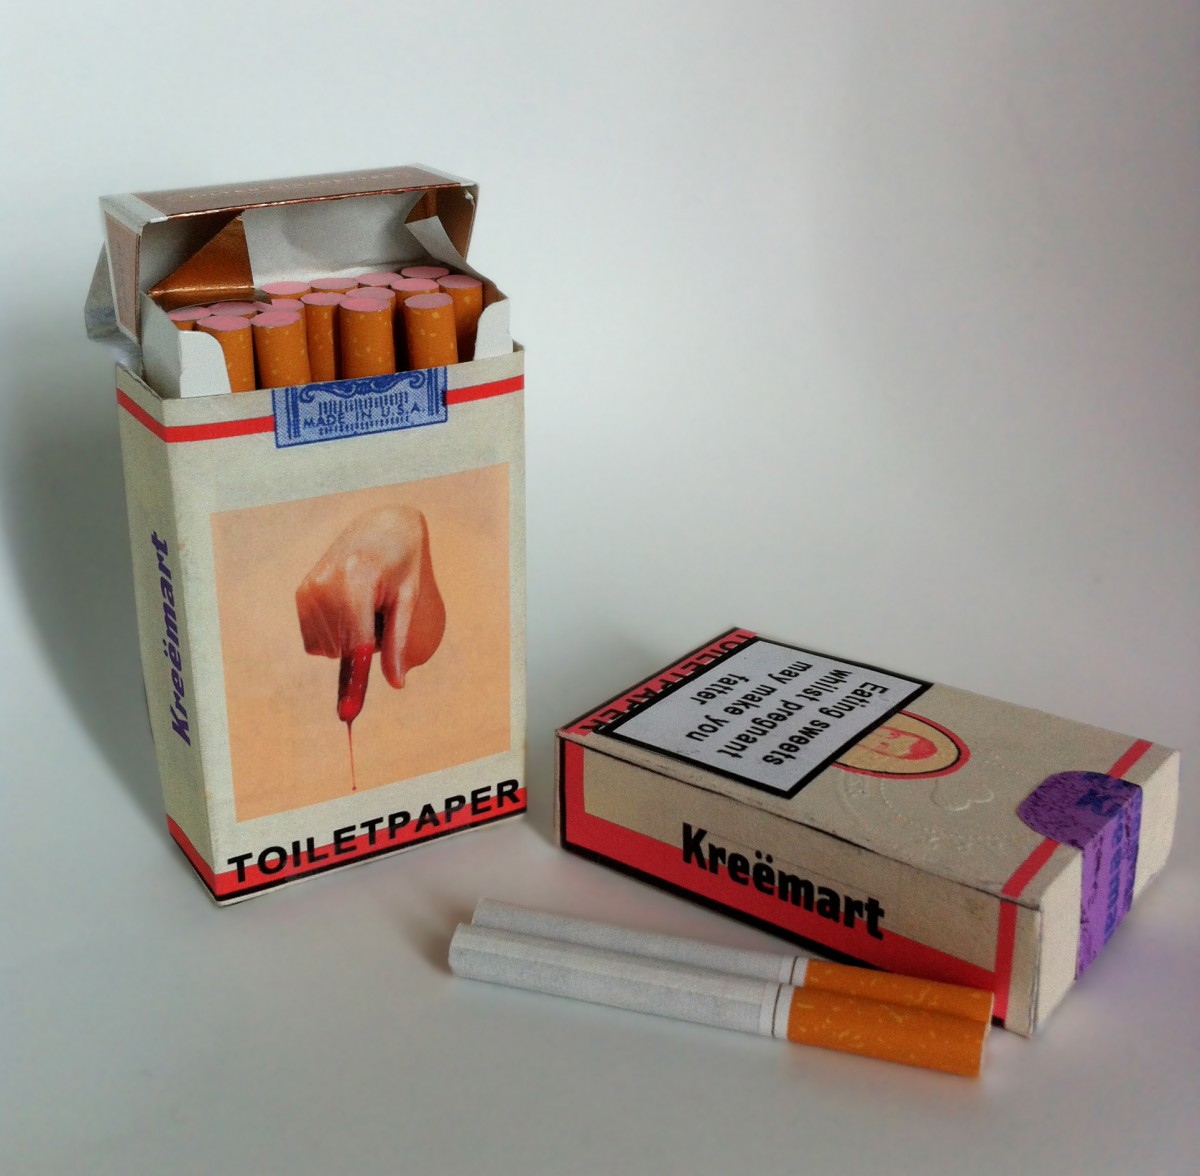 Bubble Gum Cigarettes, Maurizio Cattelan e Toilet Paper Magazine per Kreemart